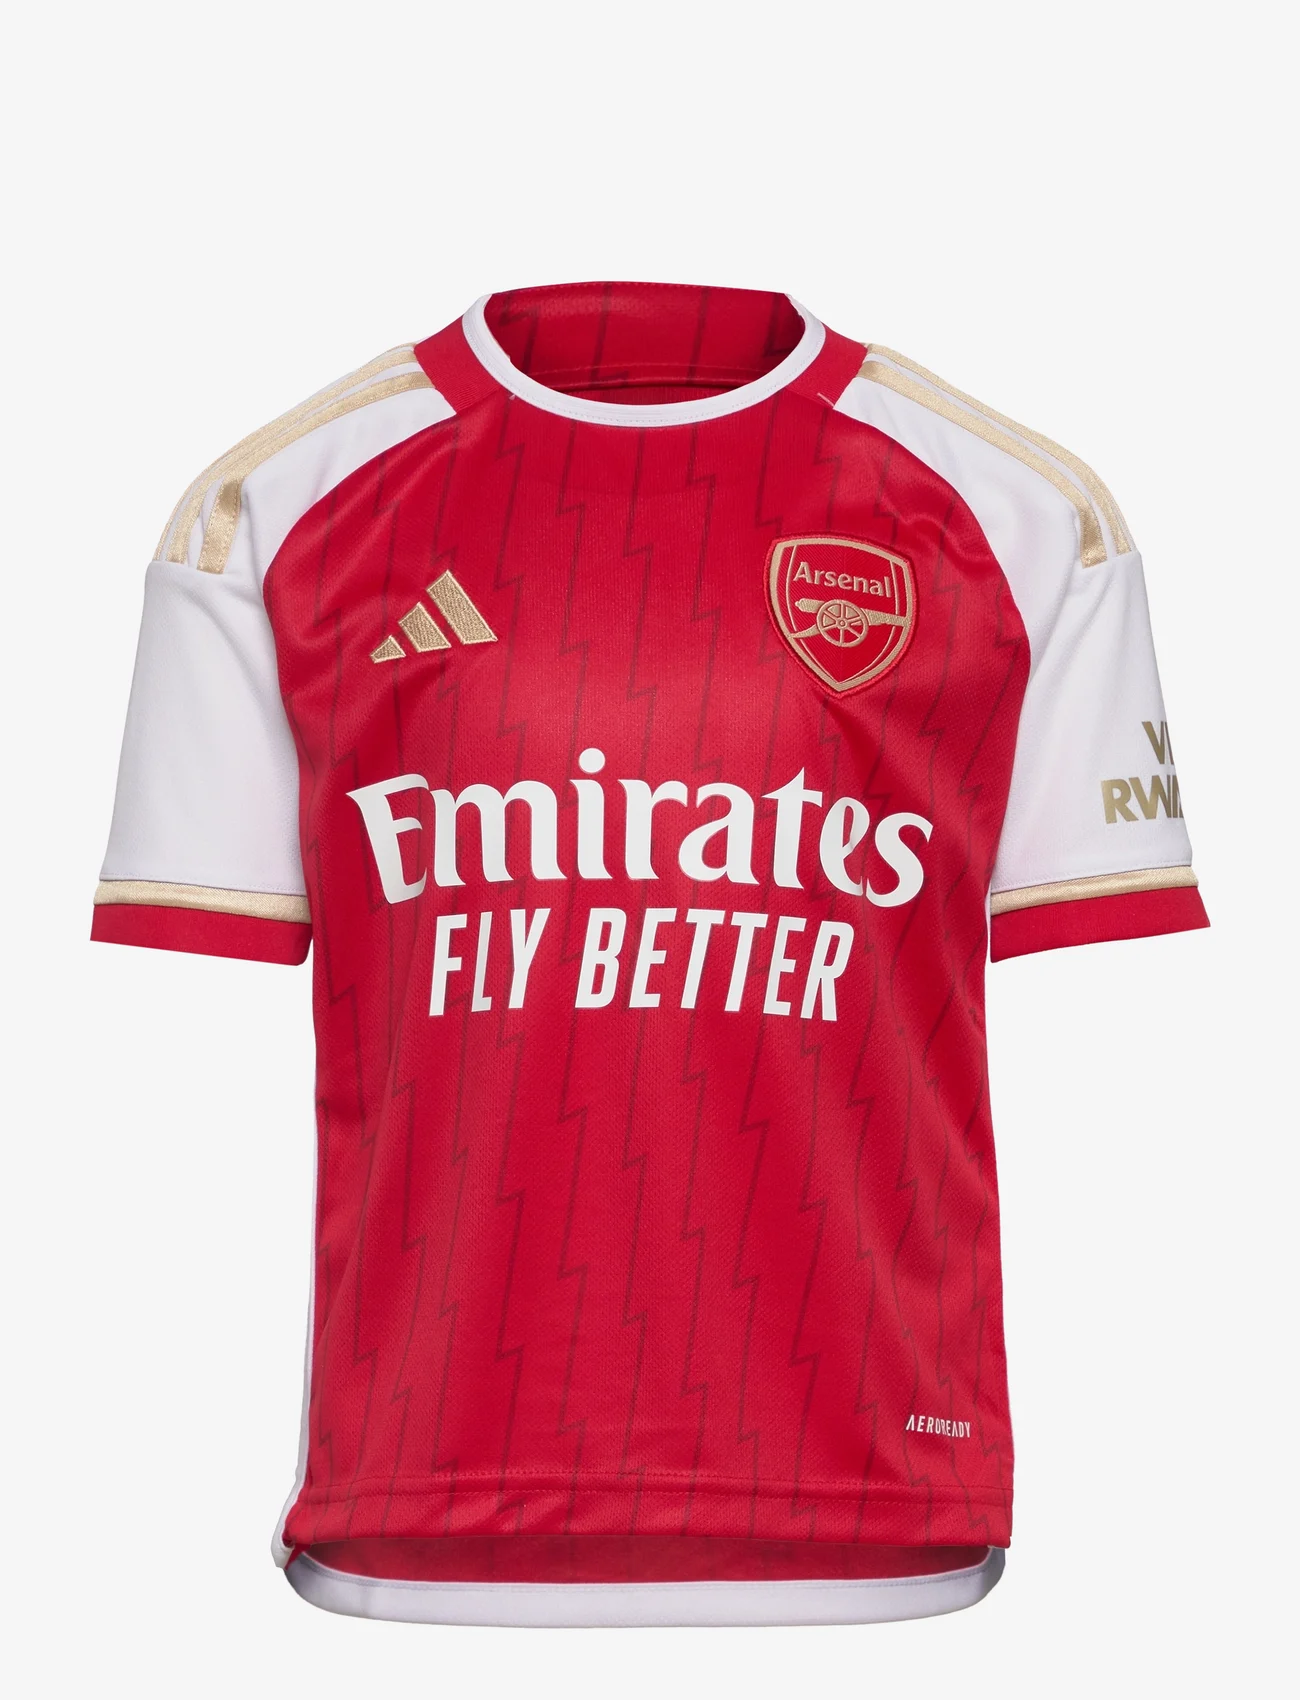 adidas Performance - Arsenal 23/24 Home Jersey - fodboldtrøjer - betsca/white - 0